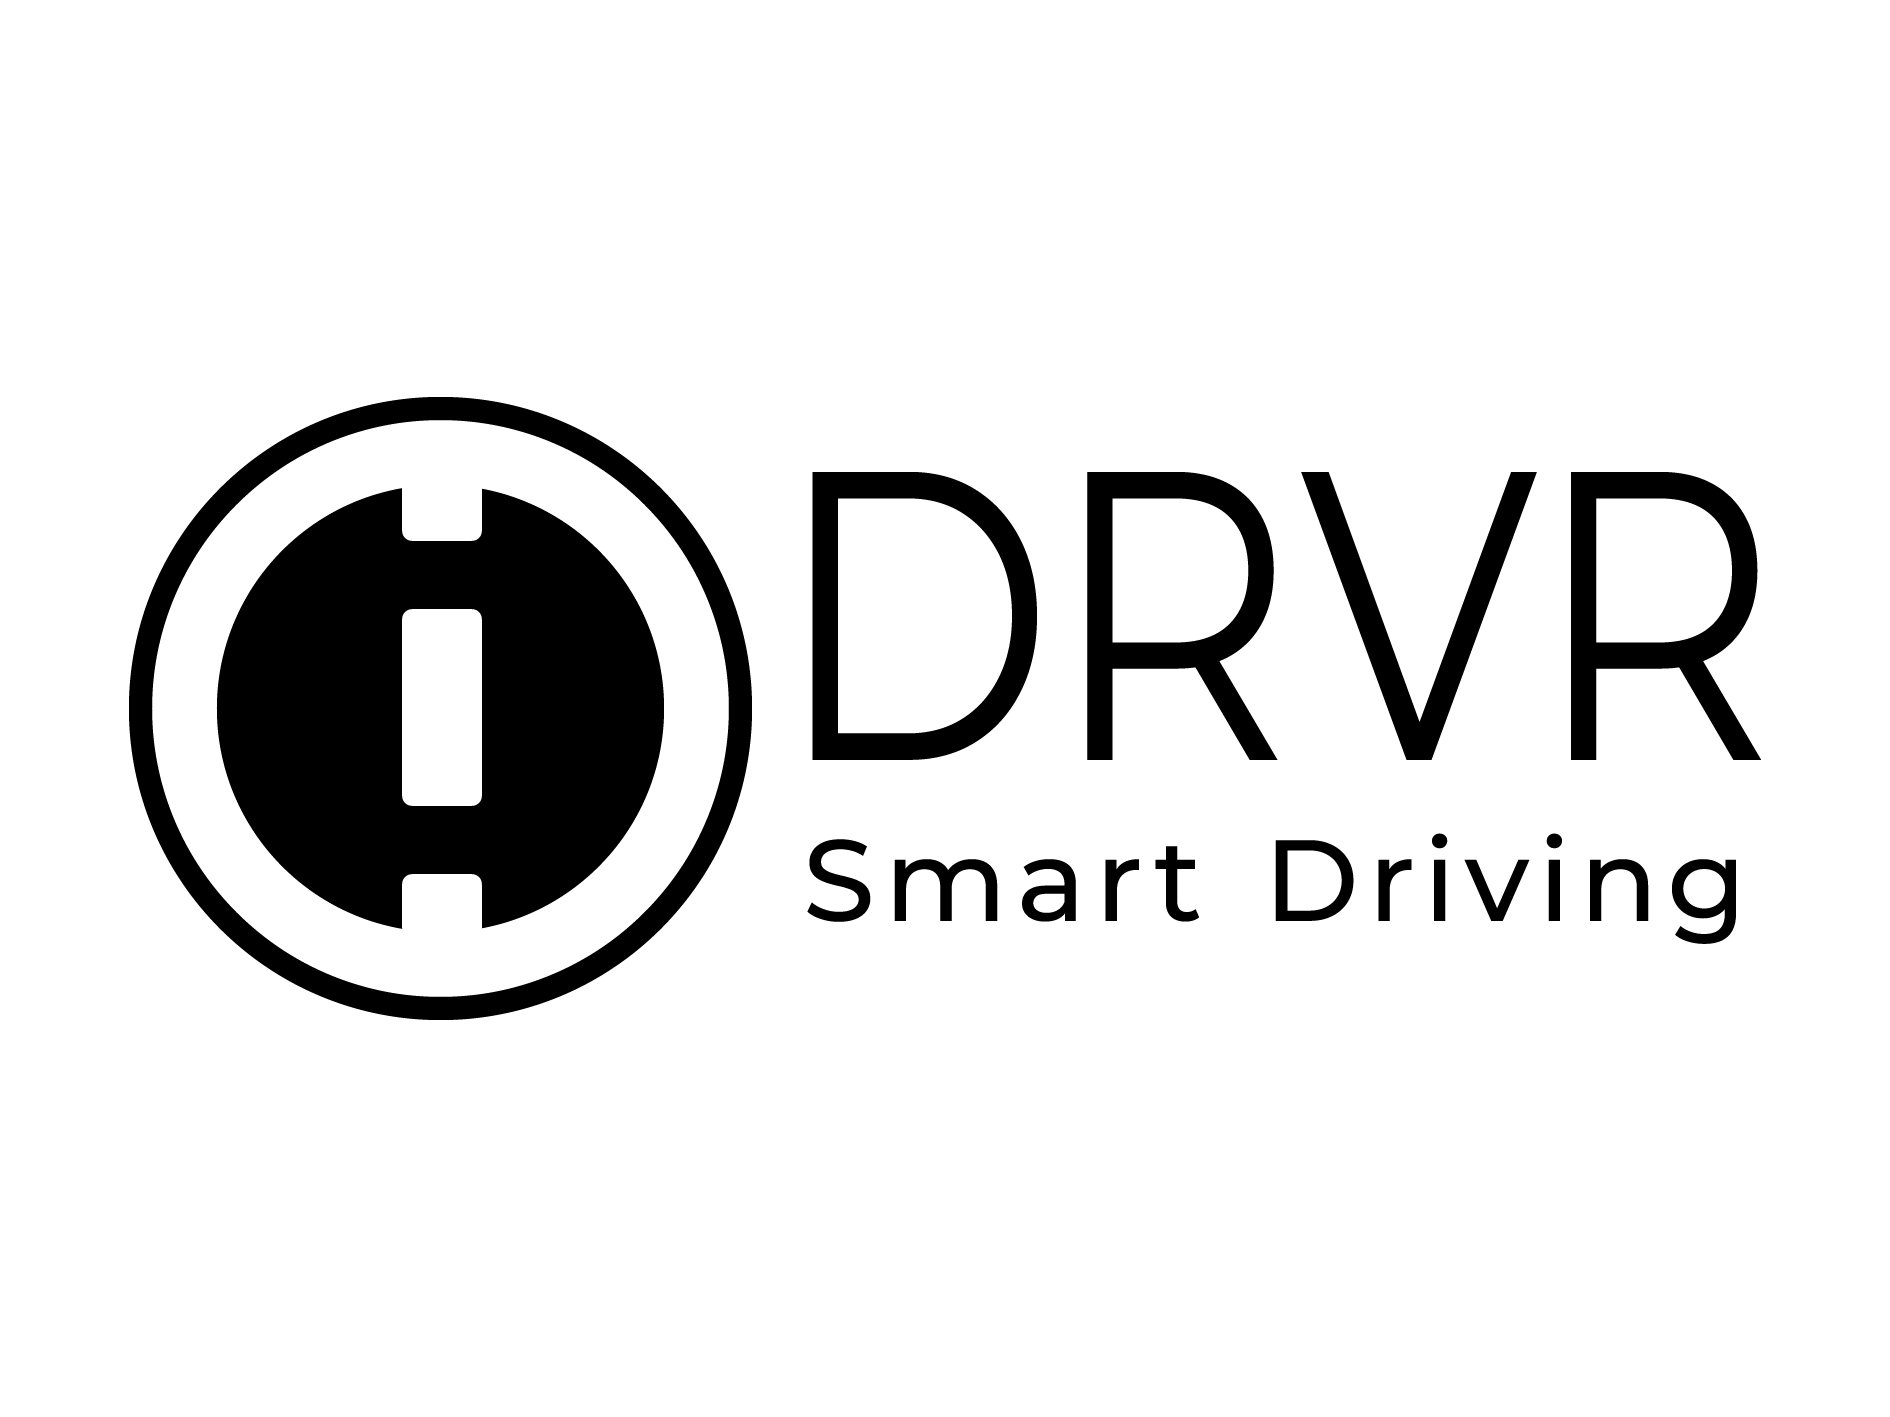 DRVR logo black